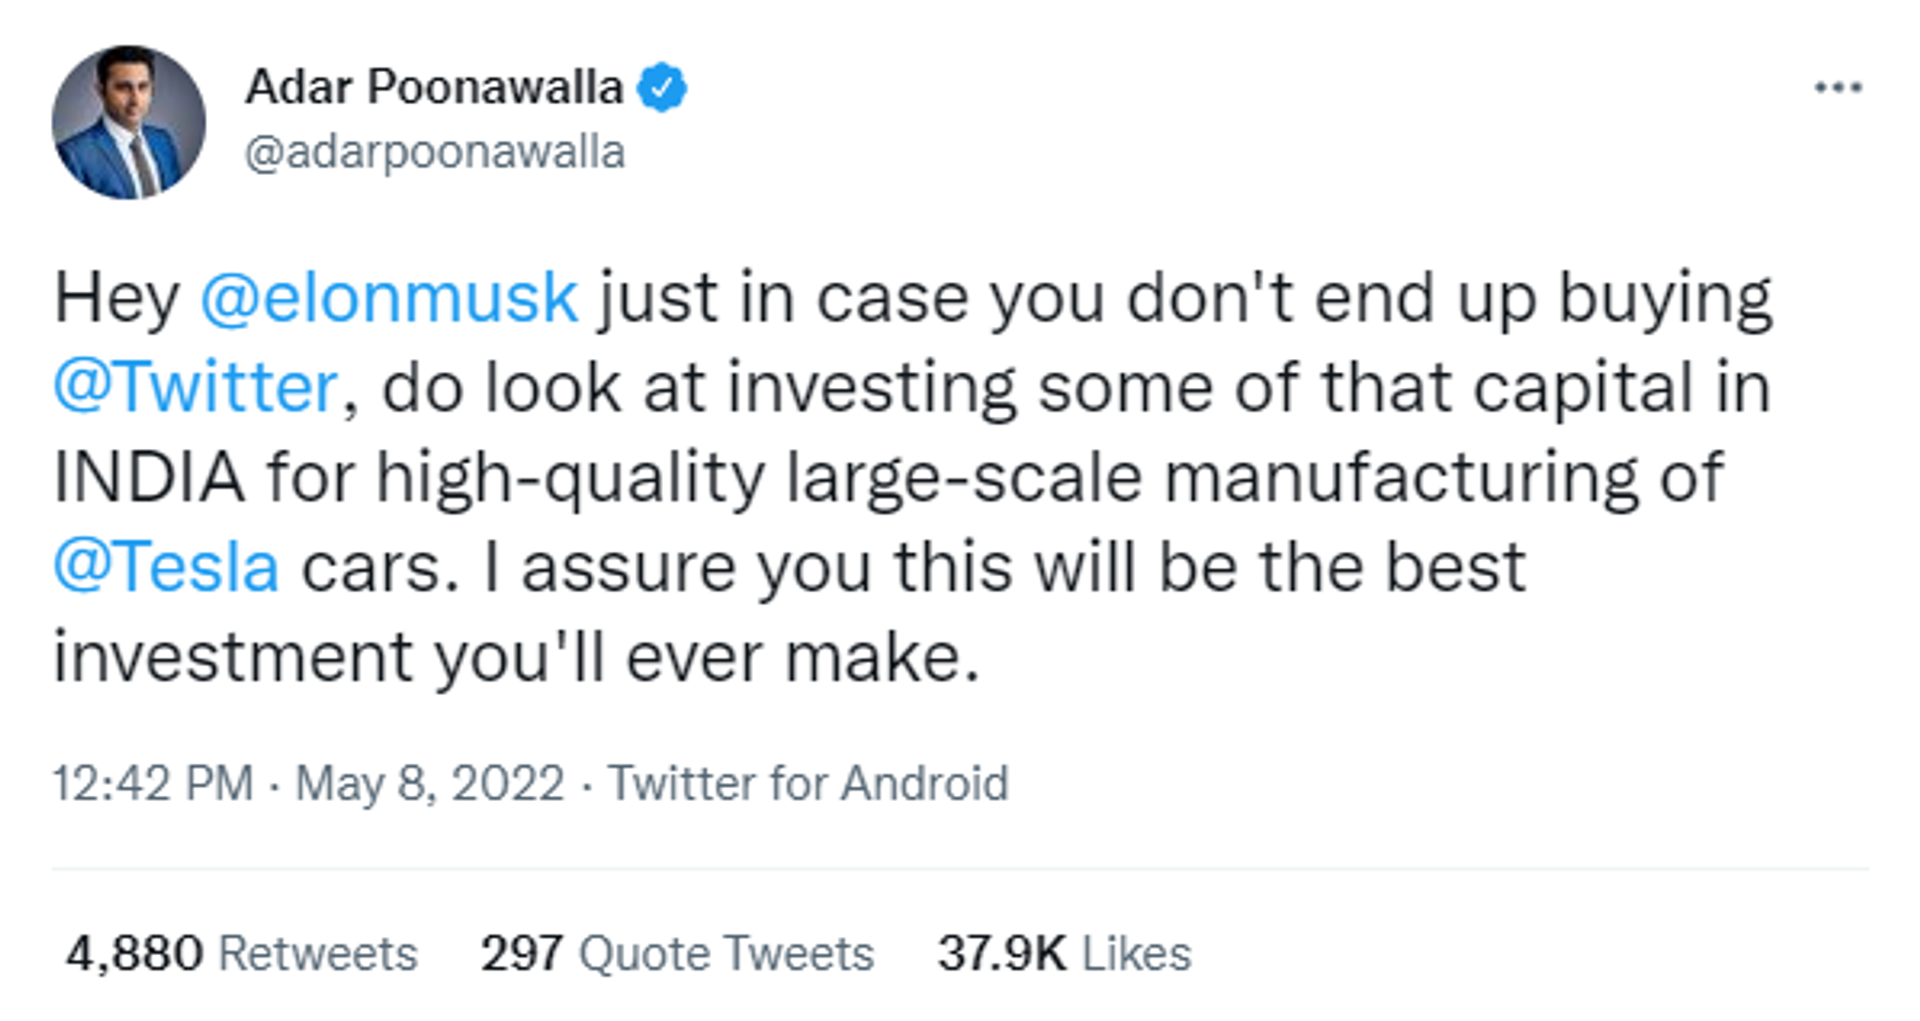 Serum Institute of India CEO Adar Poonawalla Suggest Elon Musk to Invest in India - Sputnik International, 1920, 08.05.2022